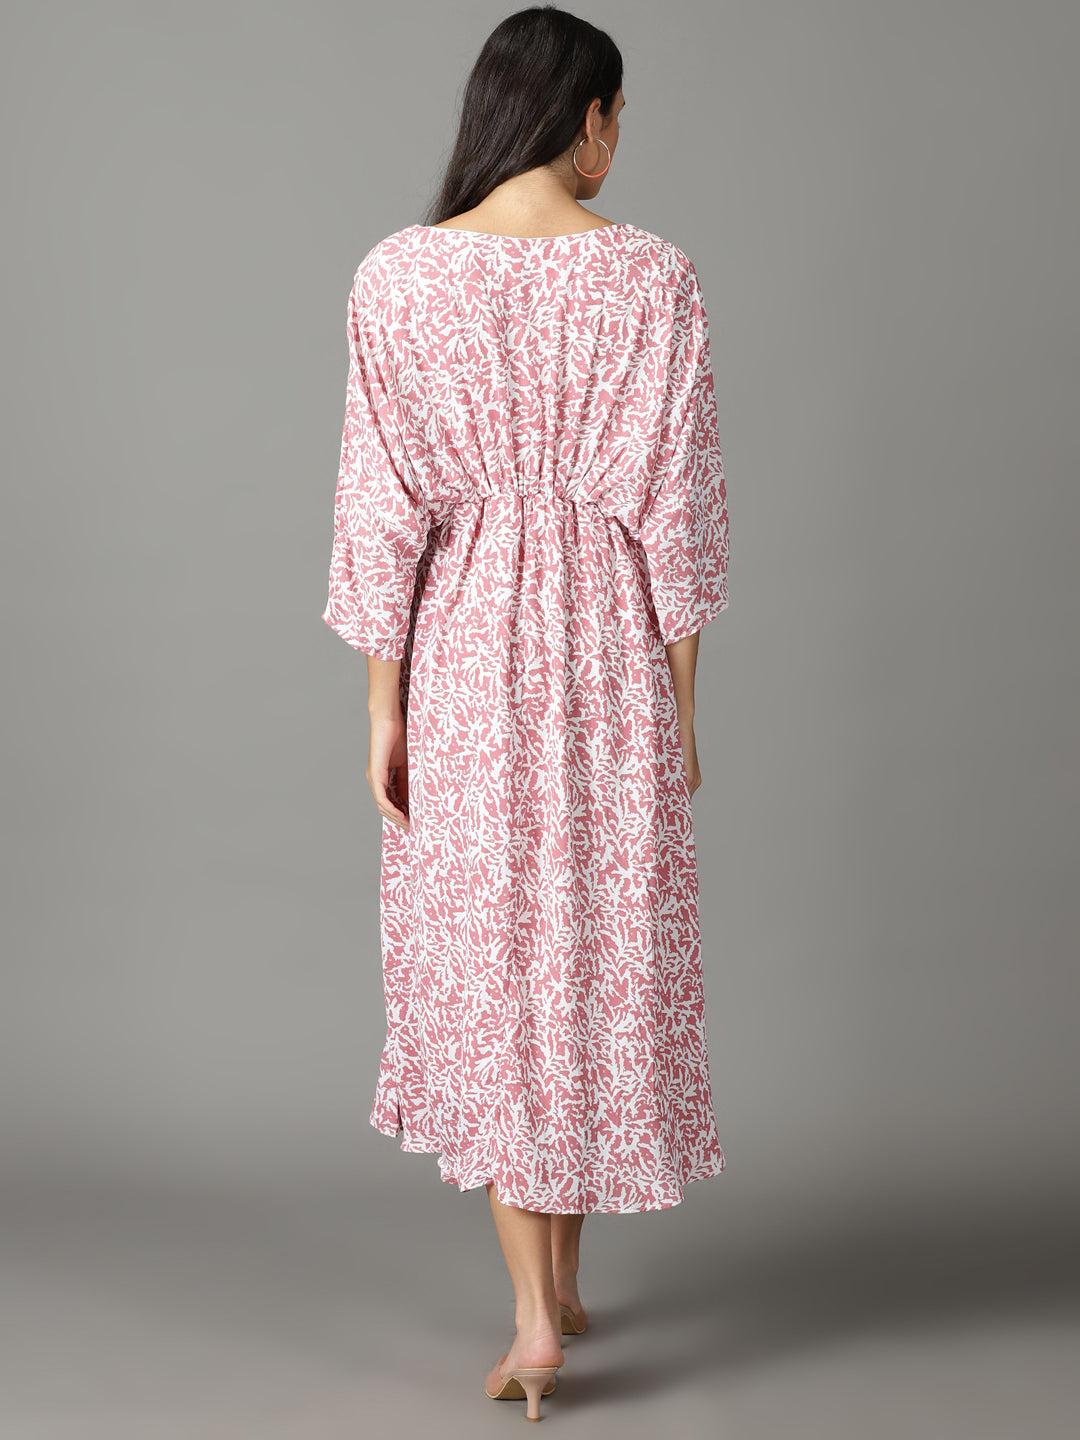 Women's Pink Printed A-Line Dress